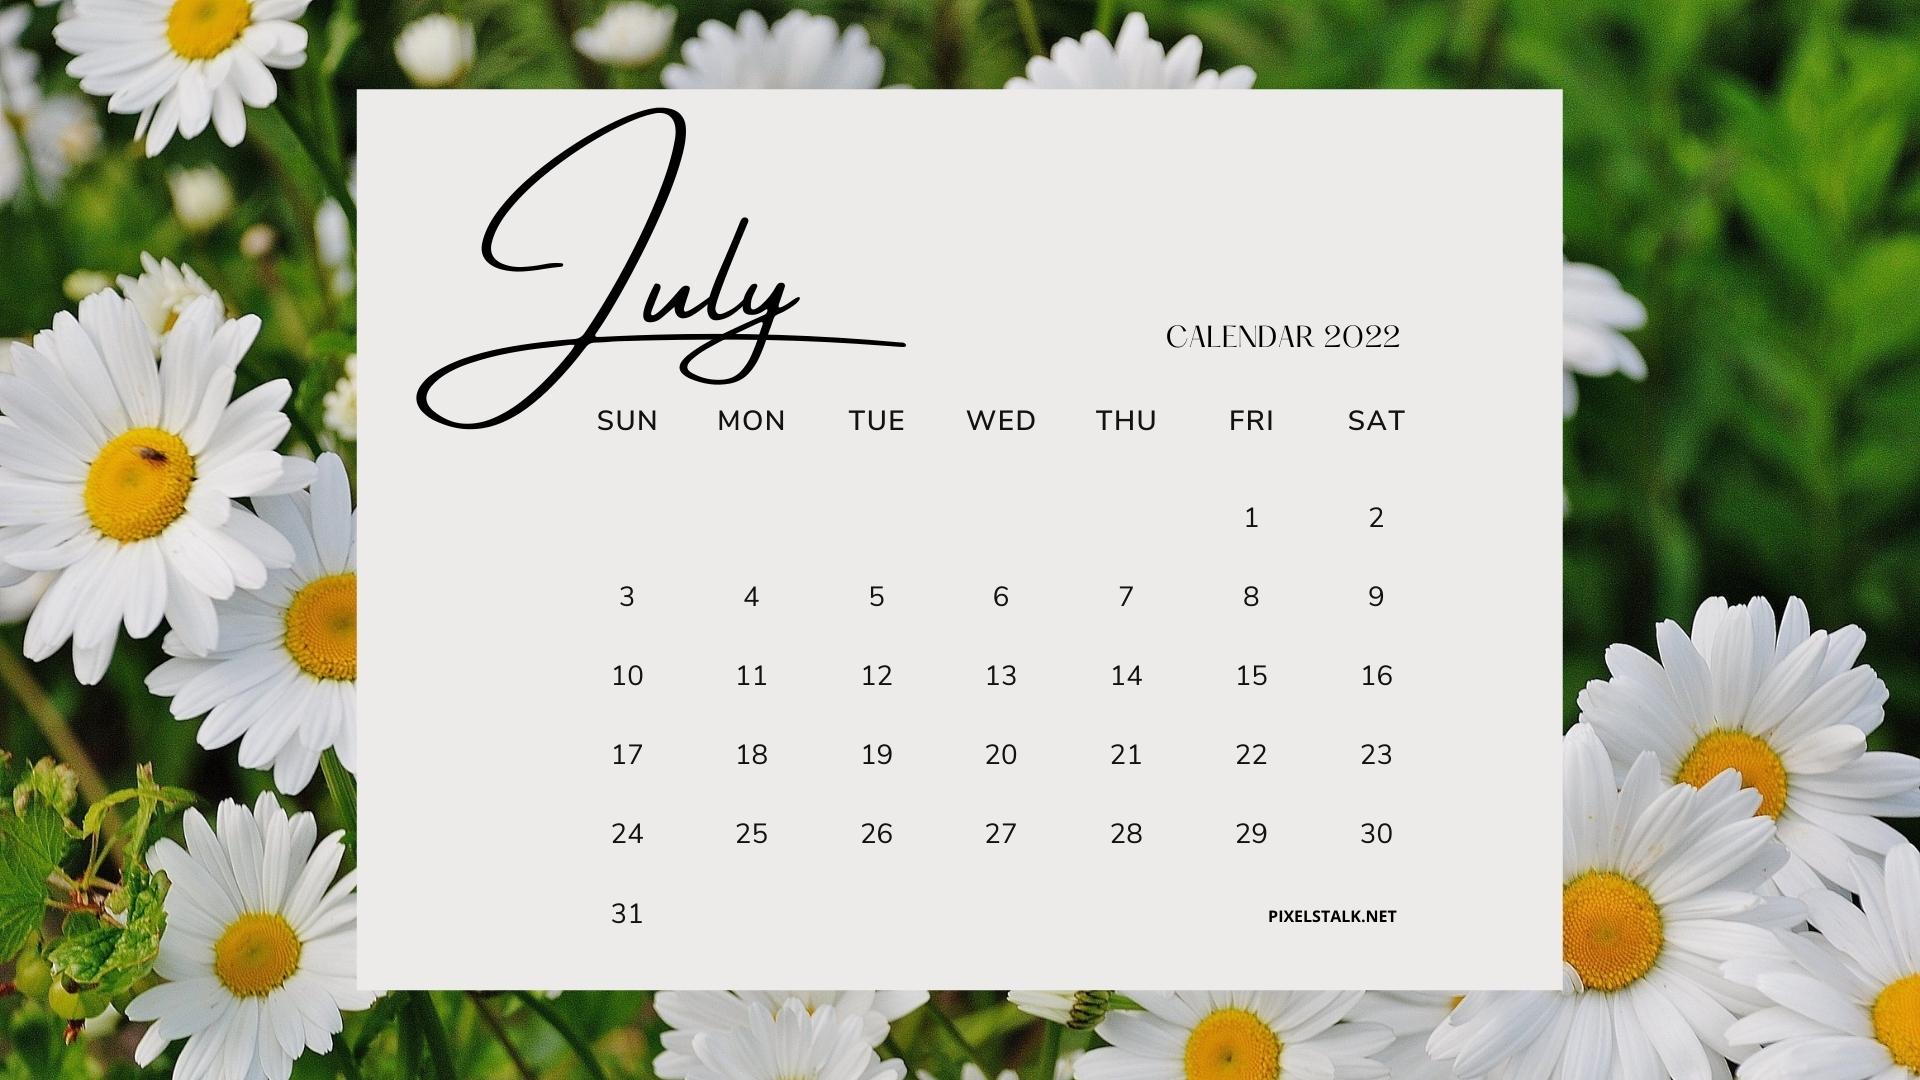 July 2022 Calendar Wallpaper HD Free download